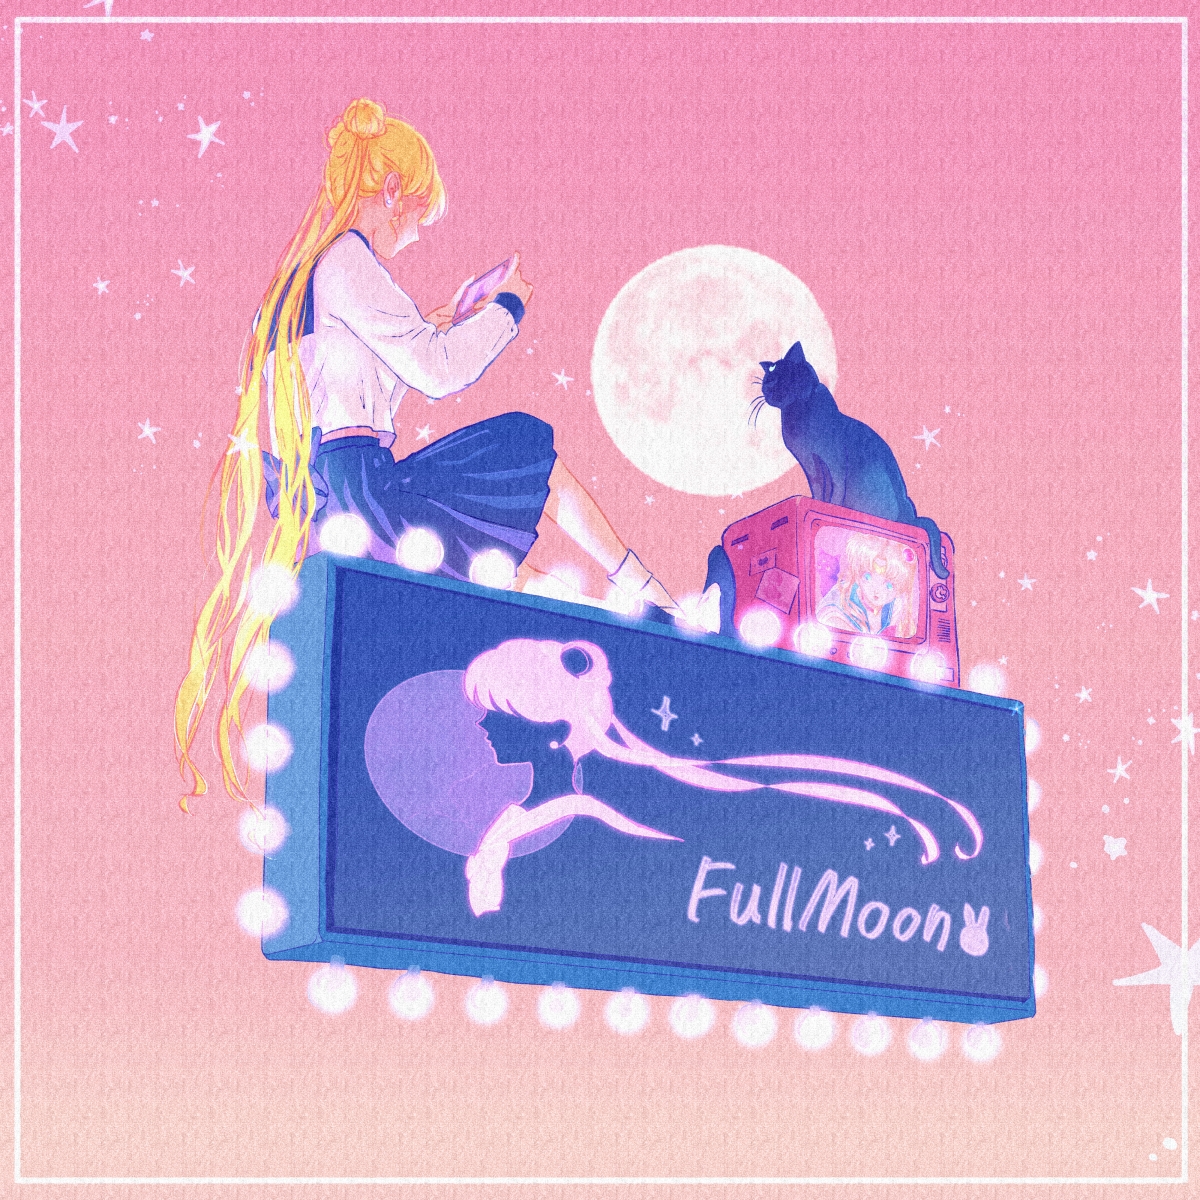 Full Moon插画图片壁纸